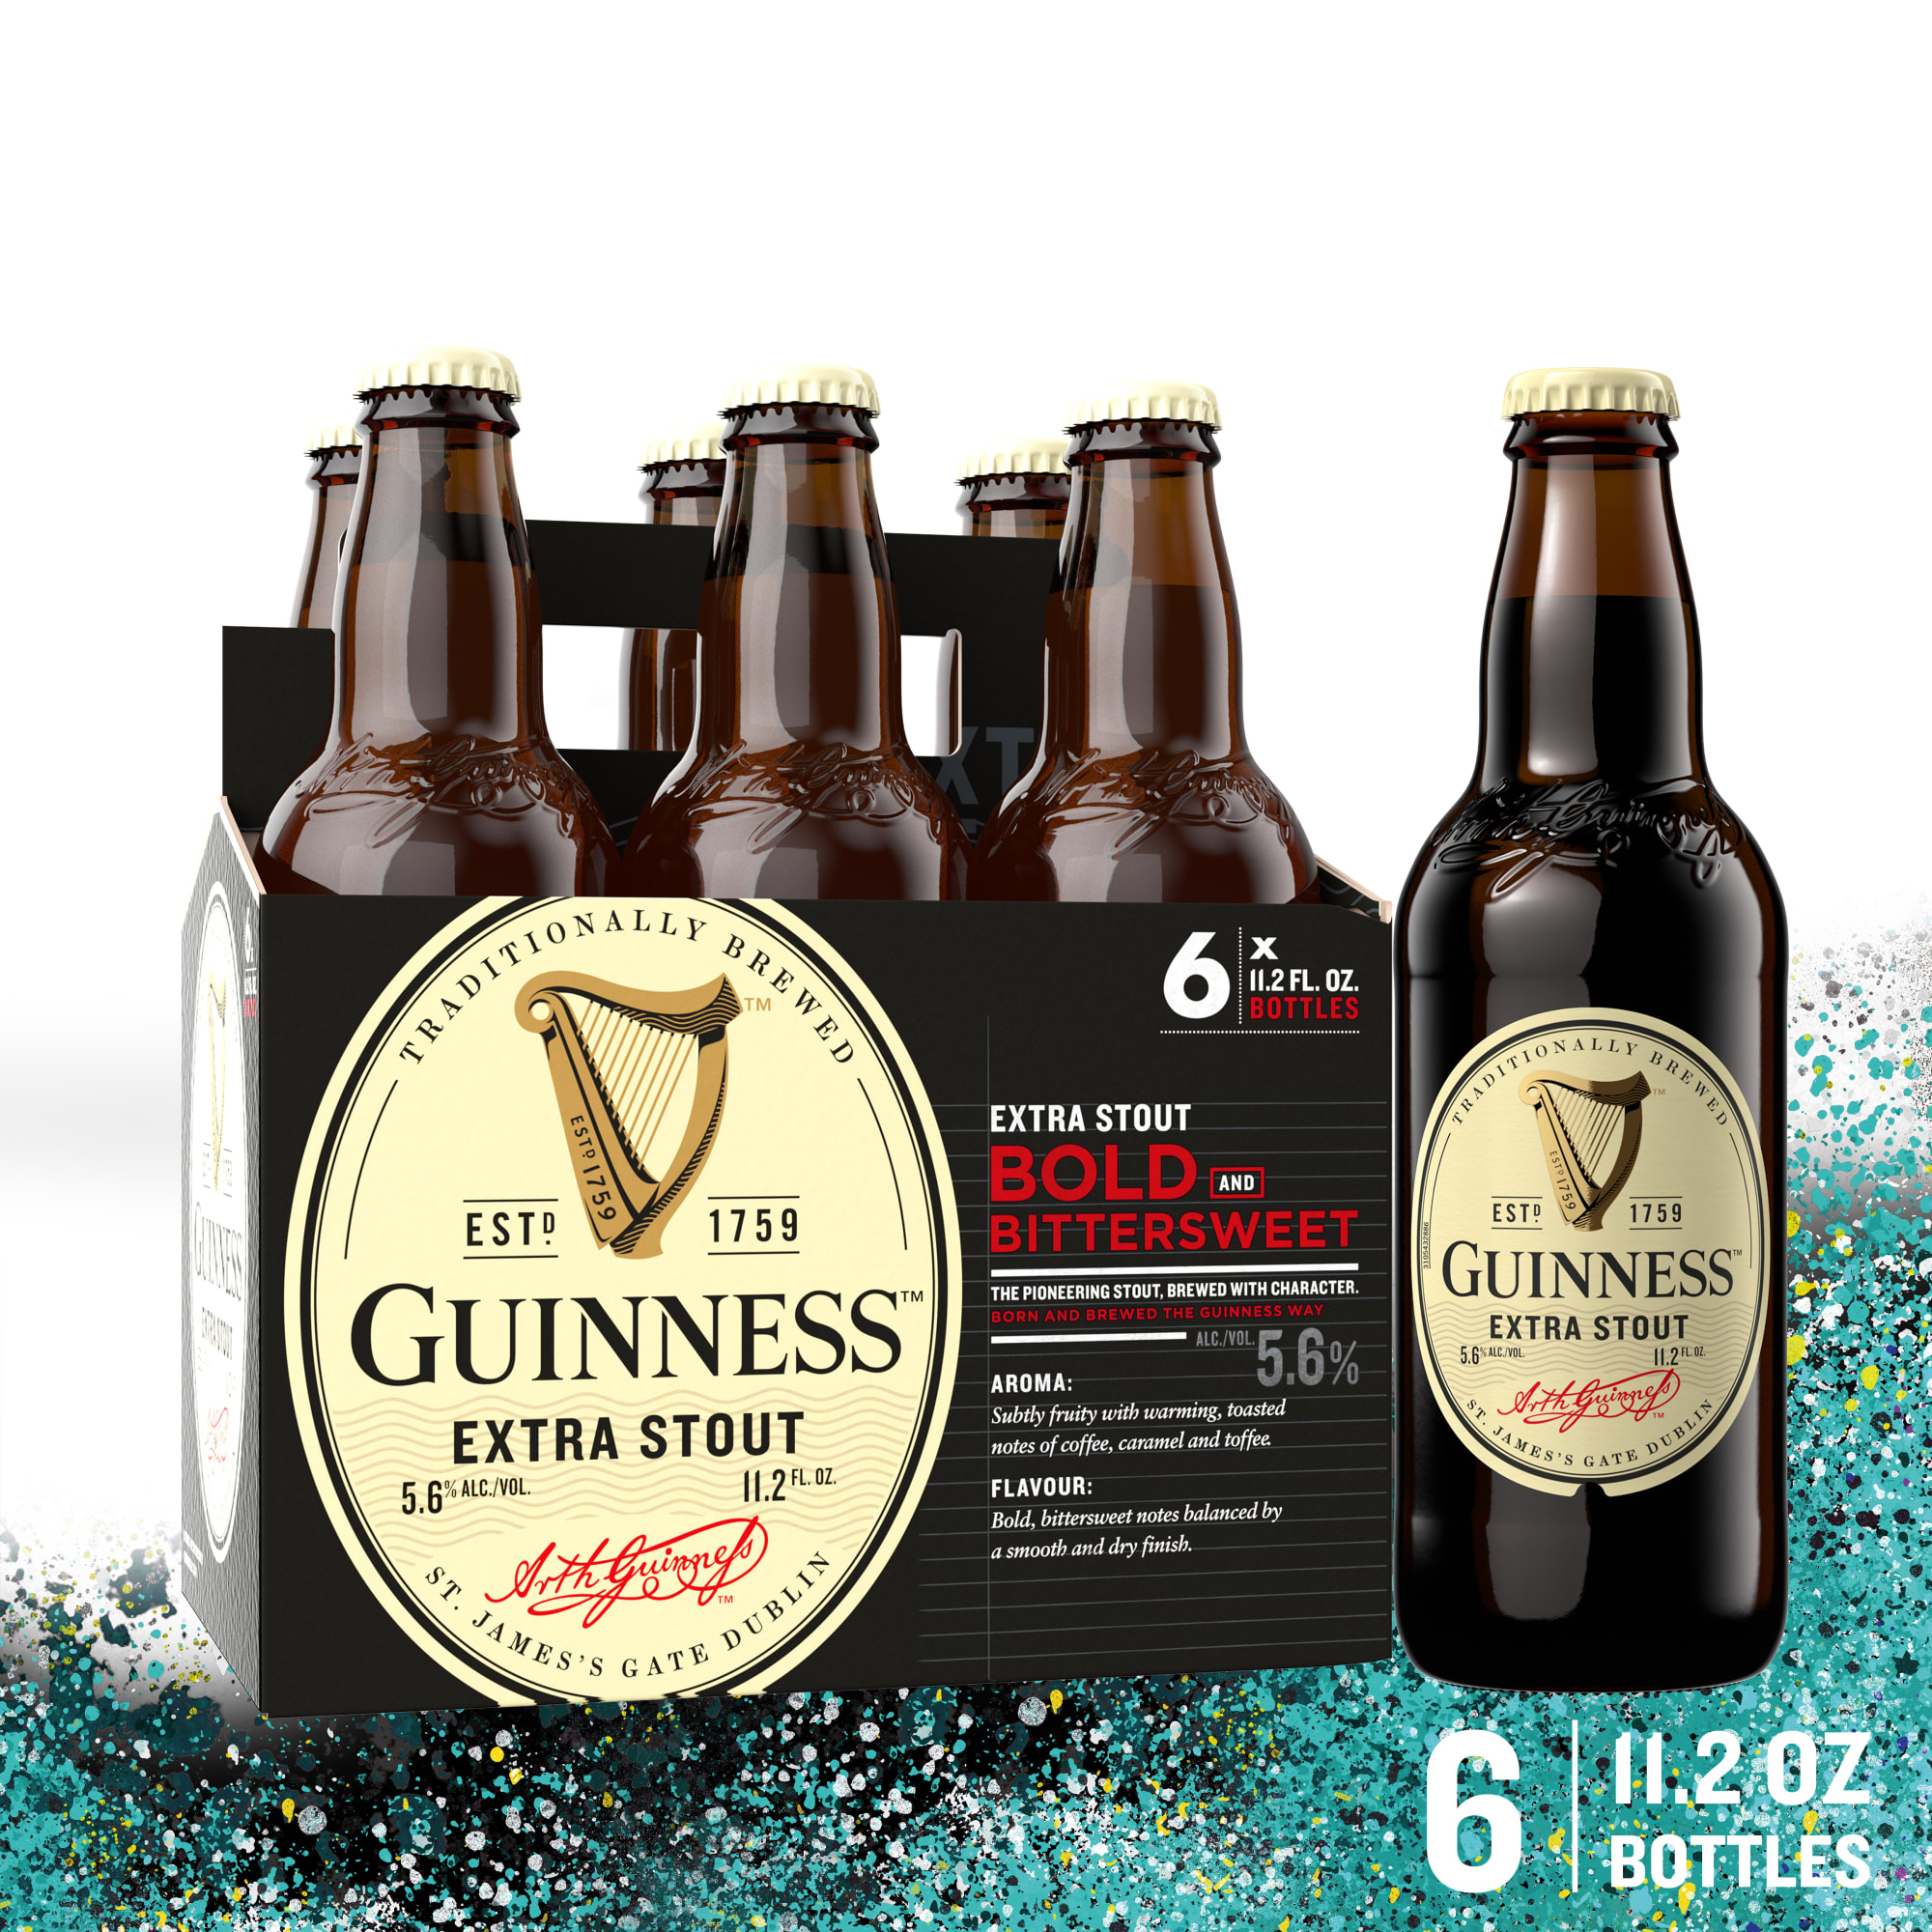 Guinness Extra Stout Import Beer, 11.2 fl oz, 6 Pack Bottles, 5.6% ABV - image 1 of 10